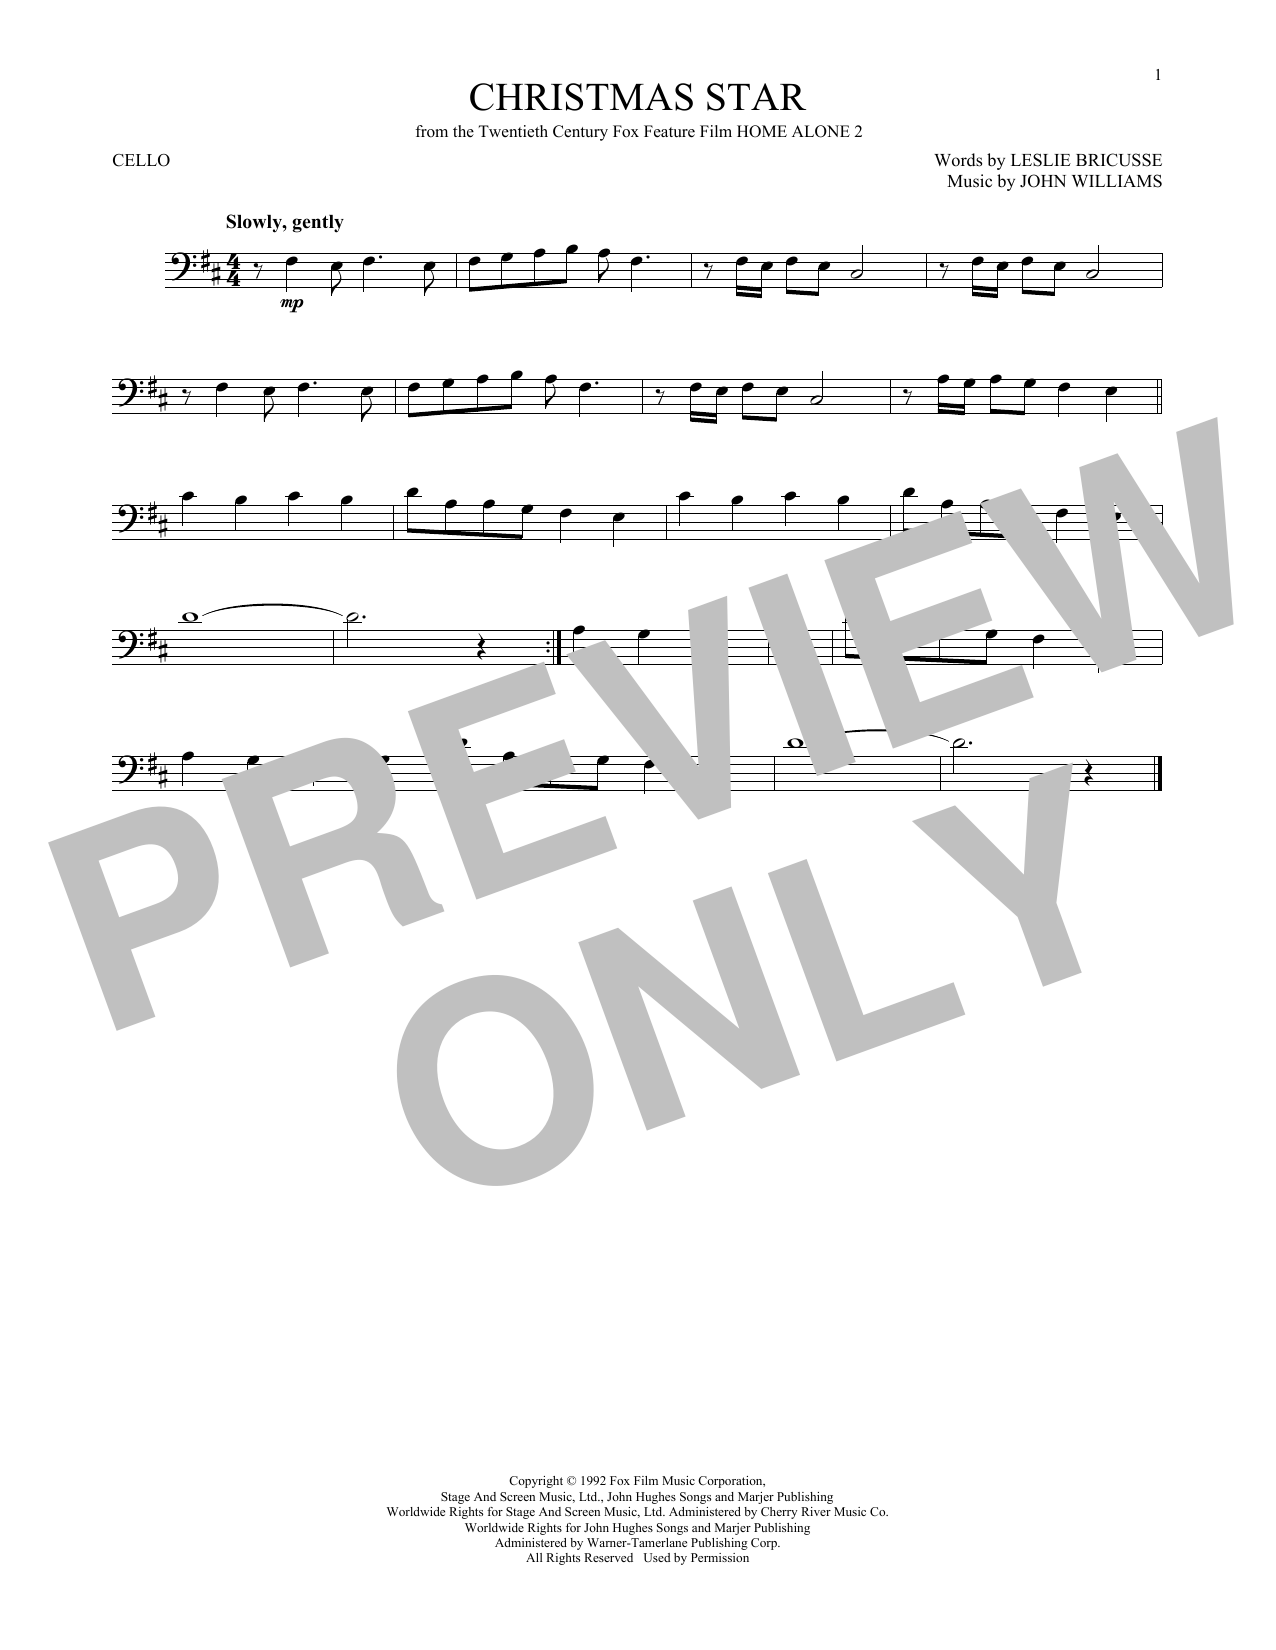 John Williams Christmas Star Sheet Music Notes & Chords for Viola - Download or Print PDF